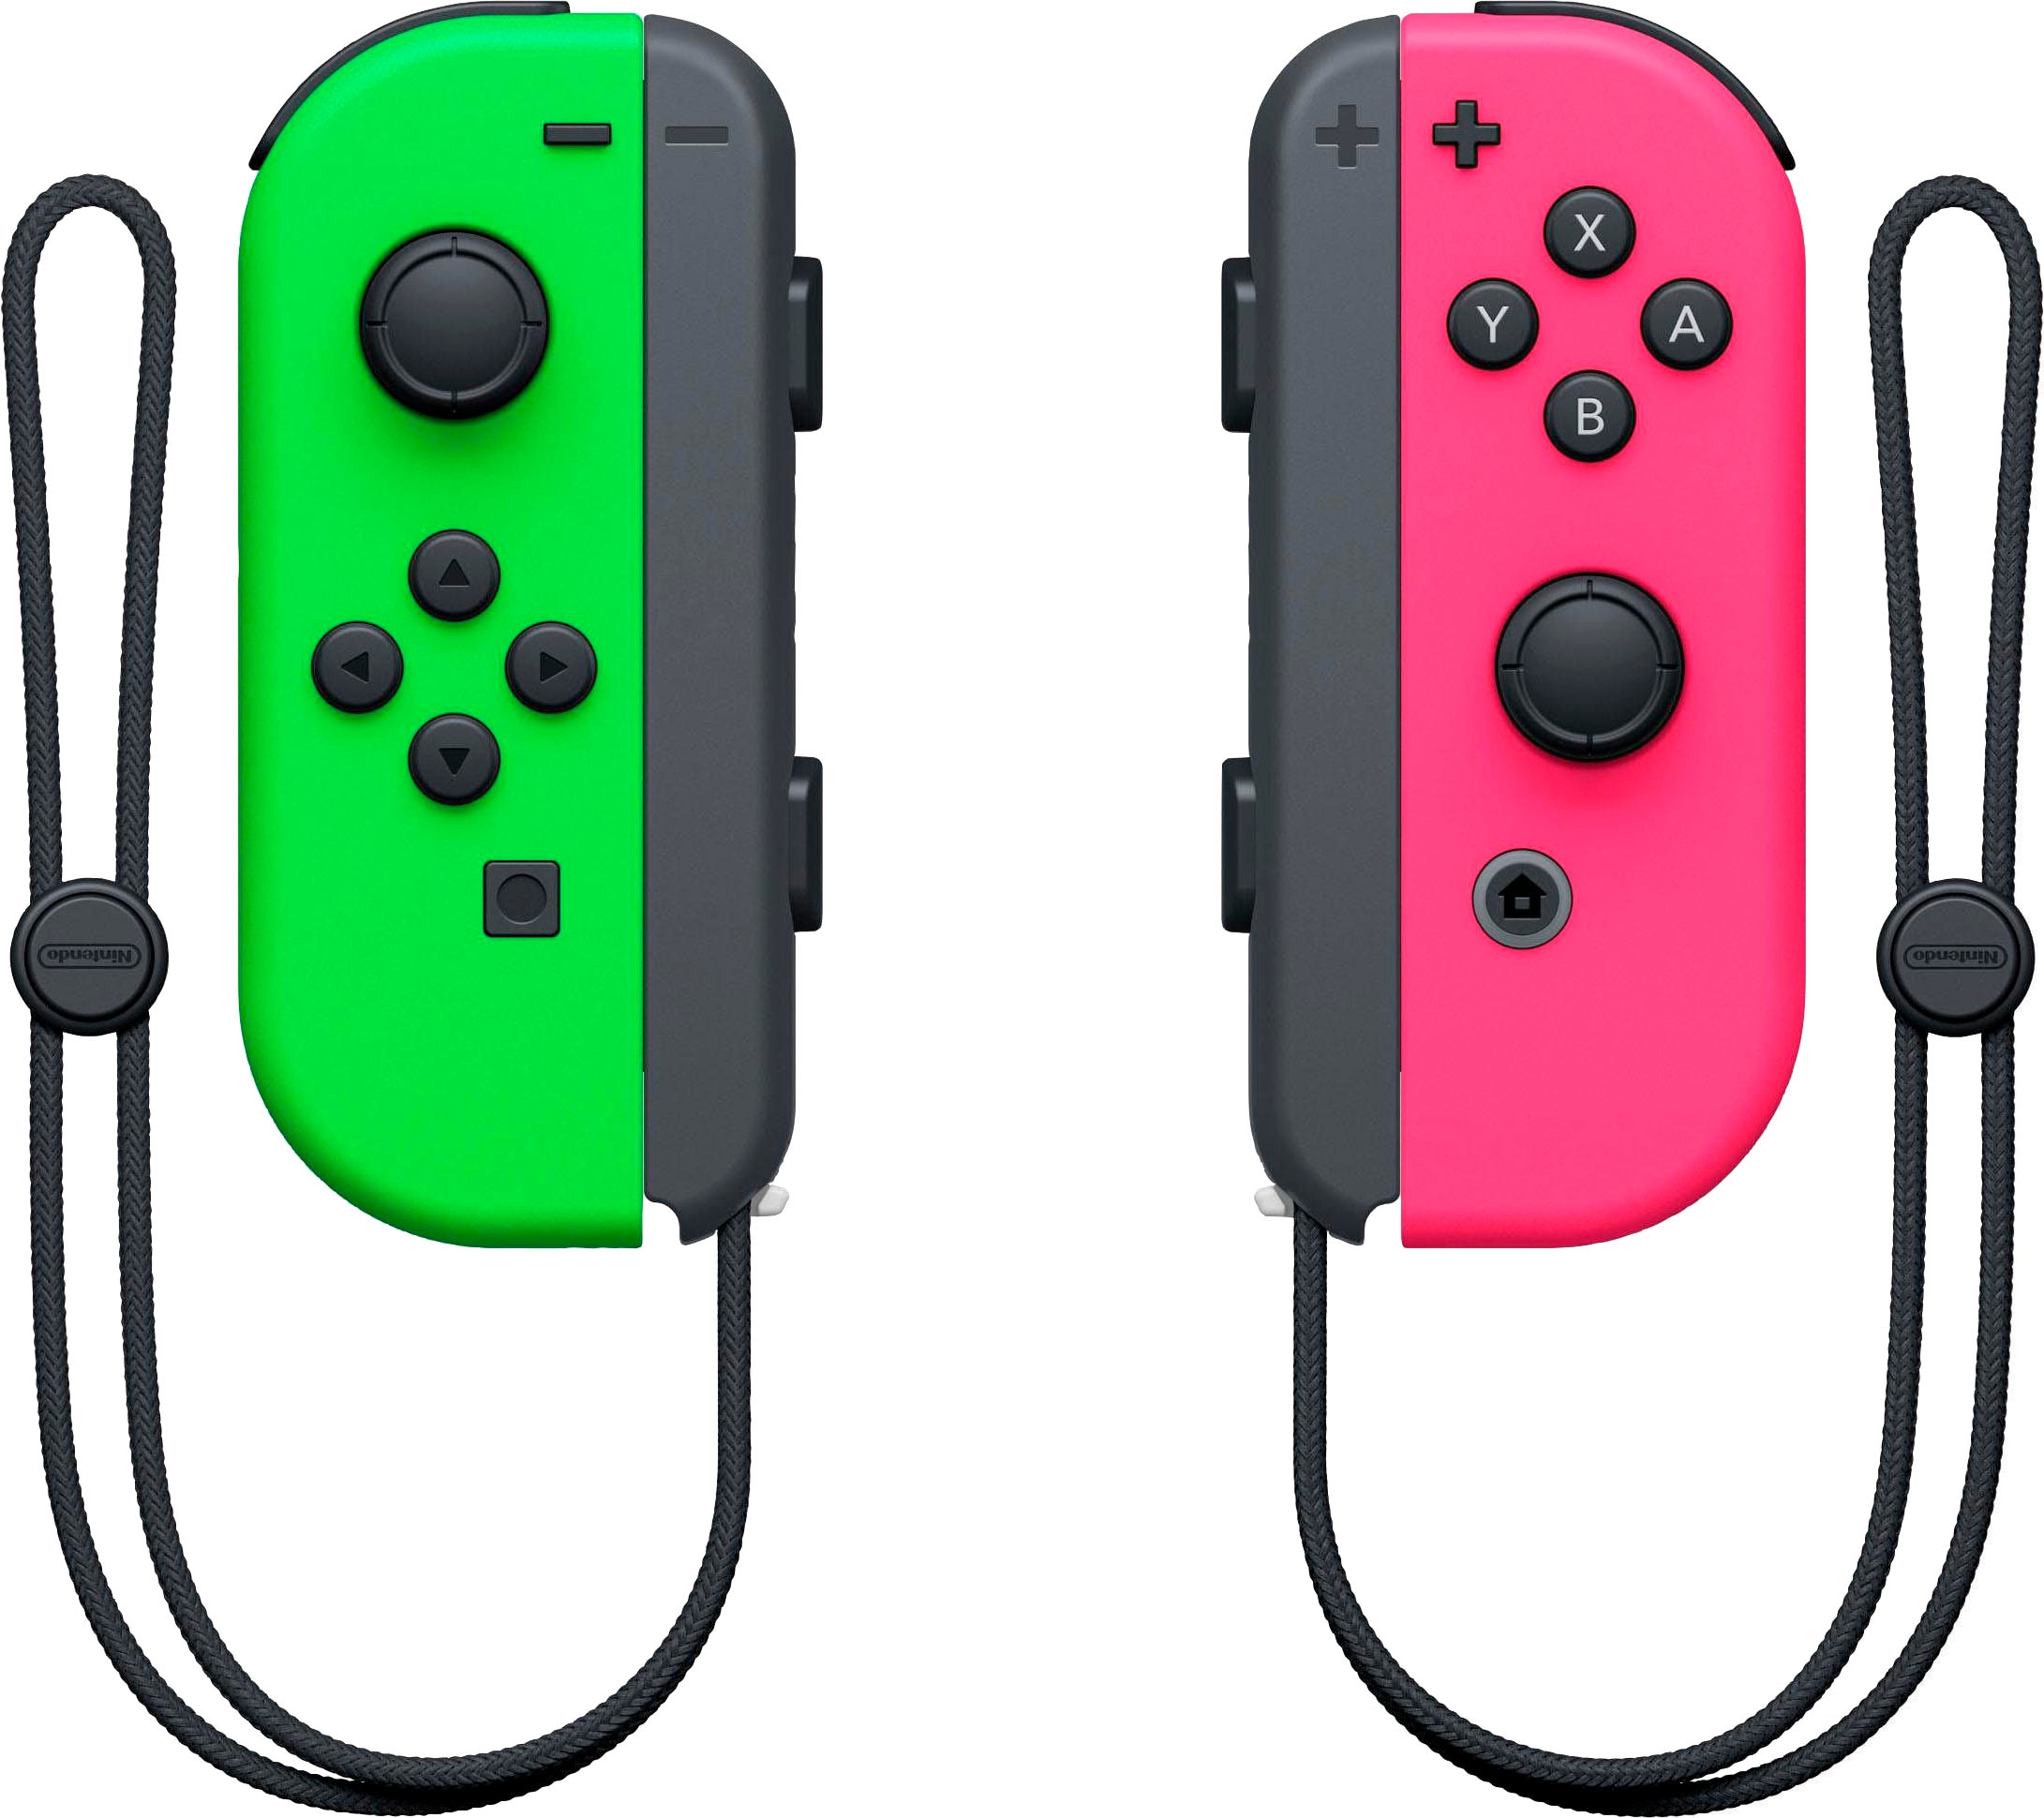 Kaufe 2 x Nintendo Switch Joy-Con-Lenkrad, Rennlenkrad, Mario Cart